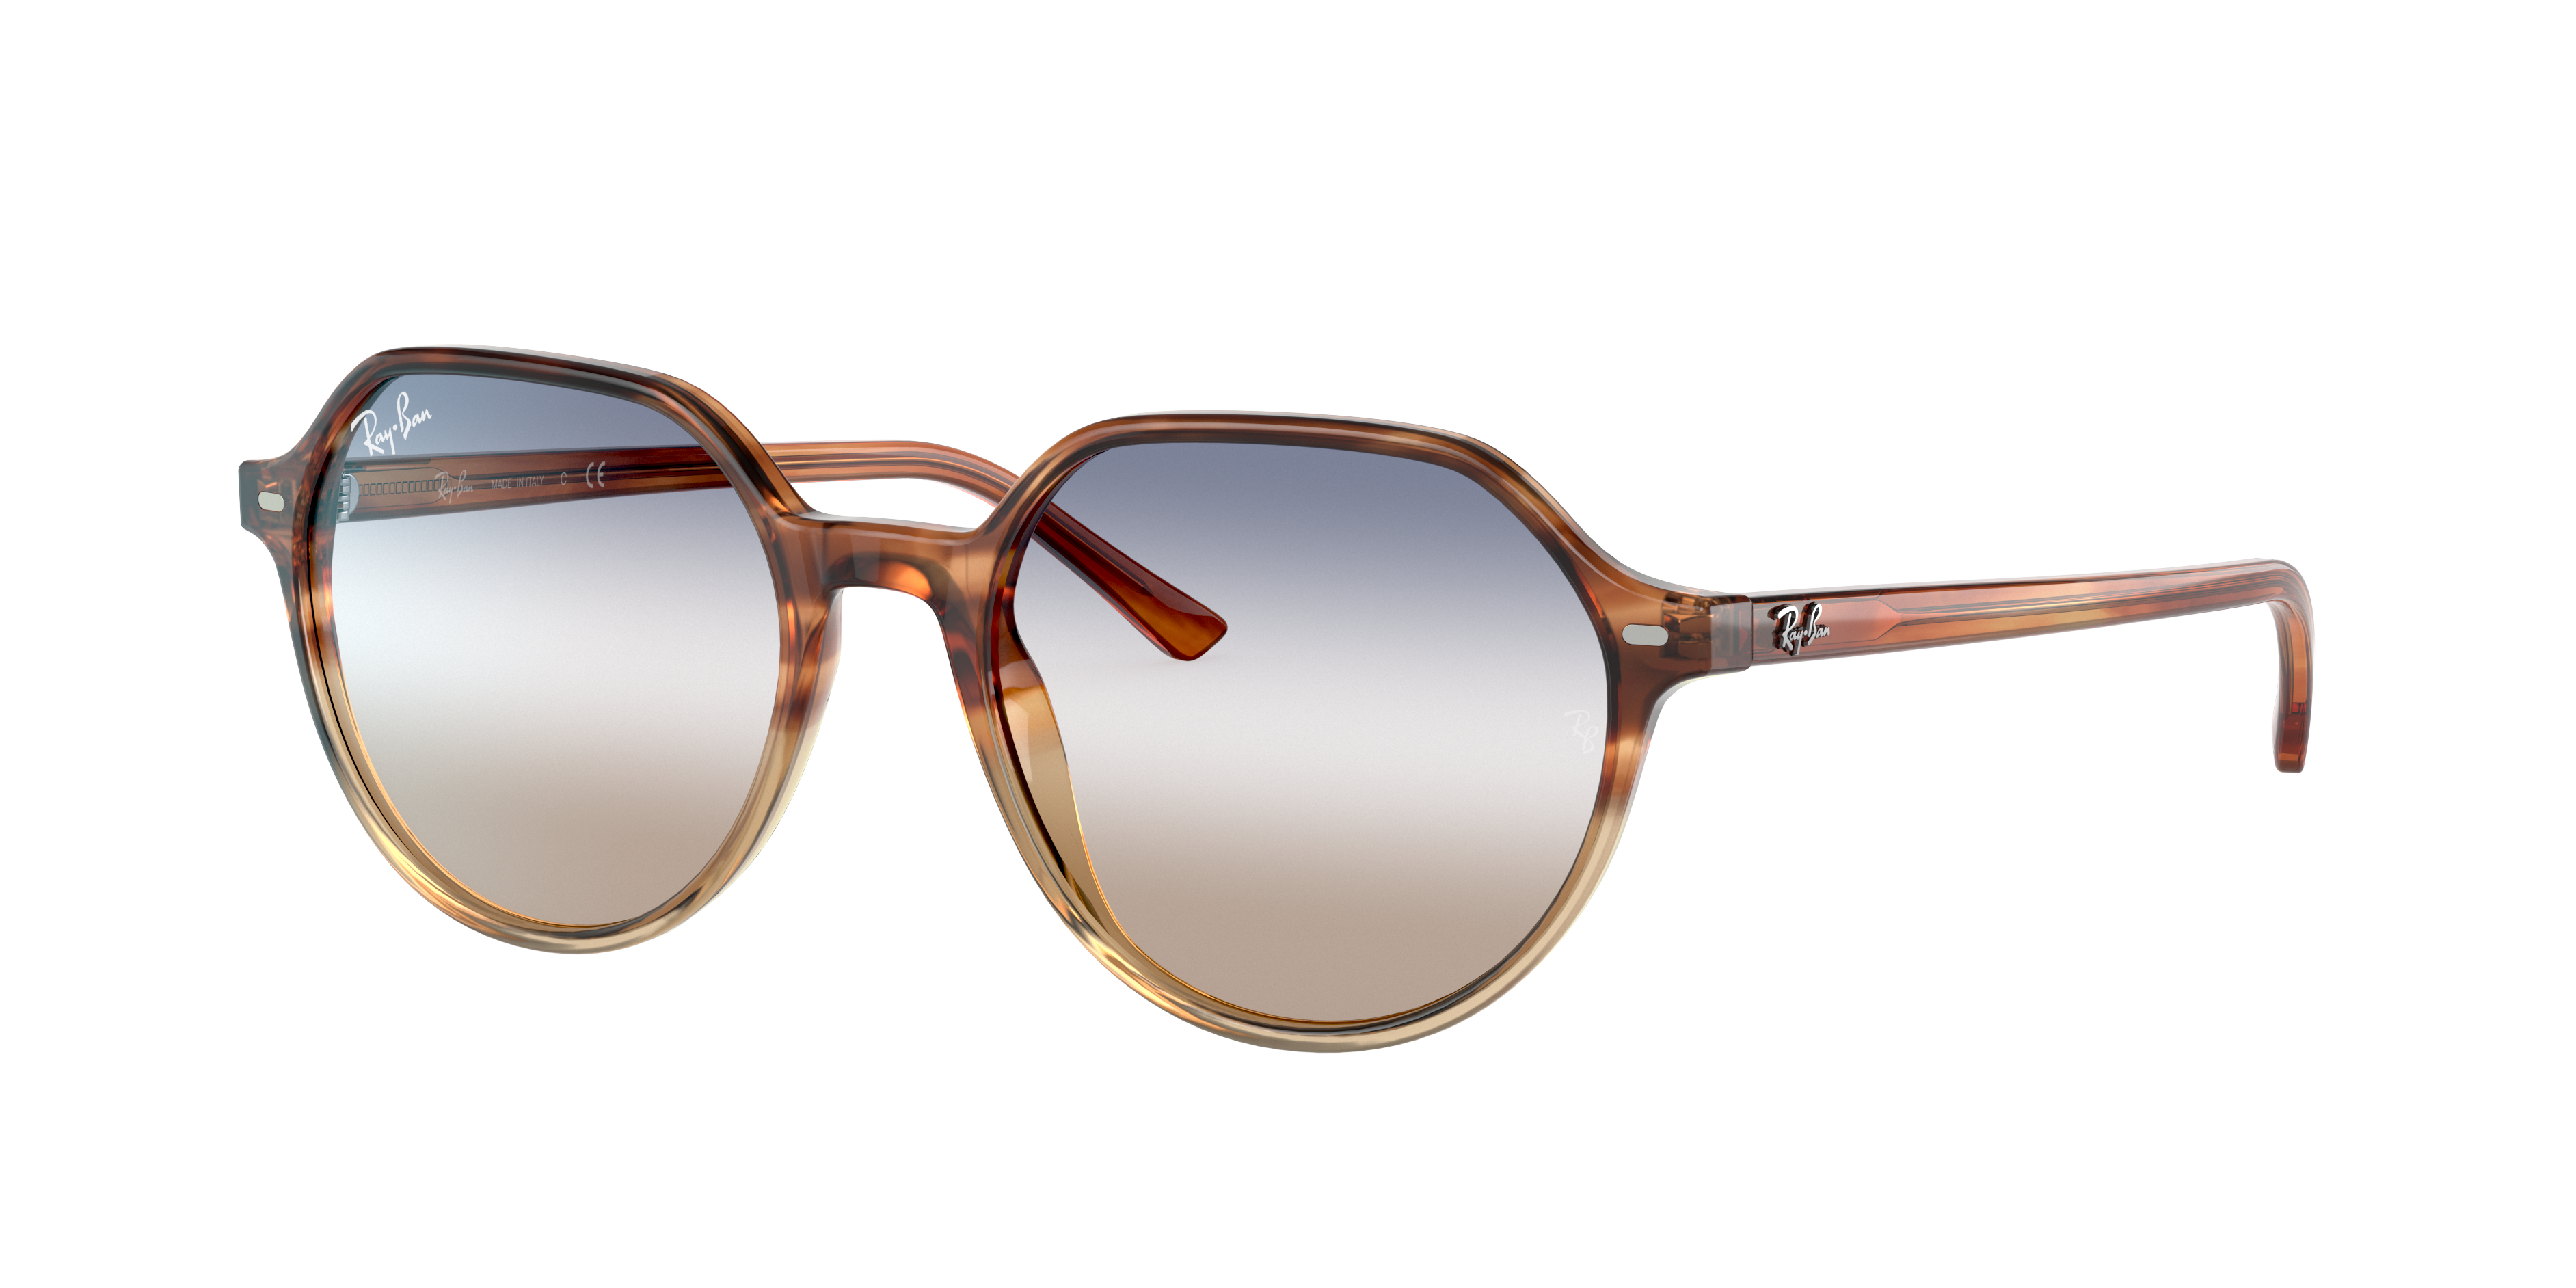 Thalia Bi-gradient Sunglasses in Brown Havana and Blue/Brown | Ray-Ban®